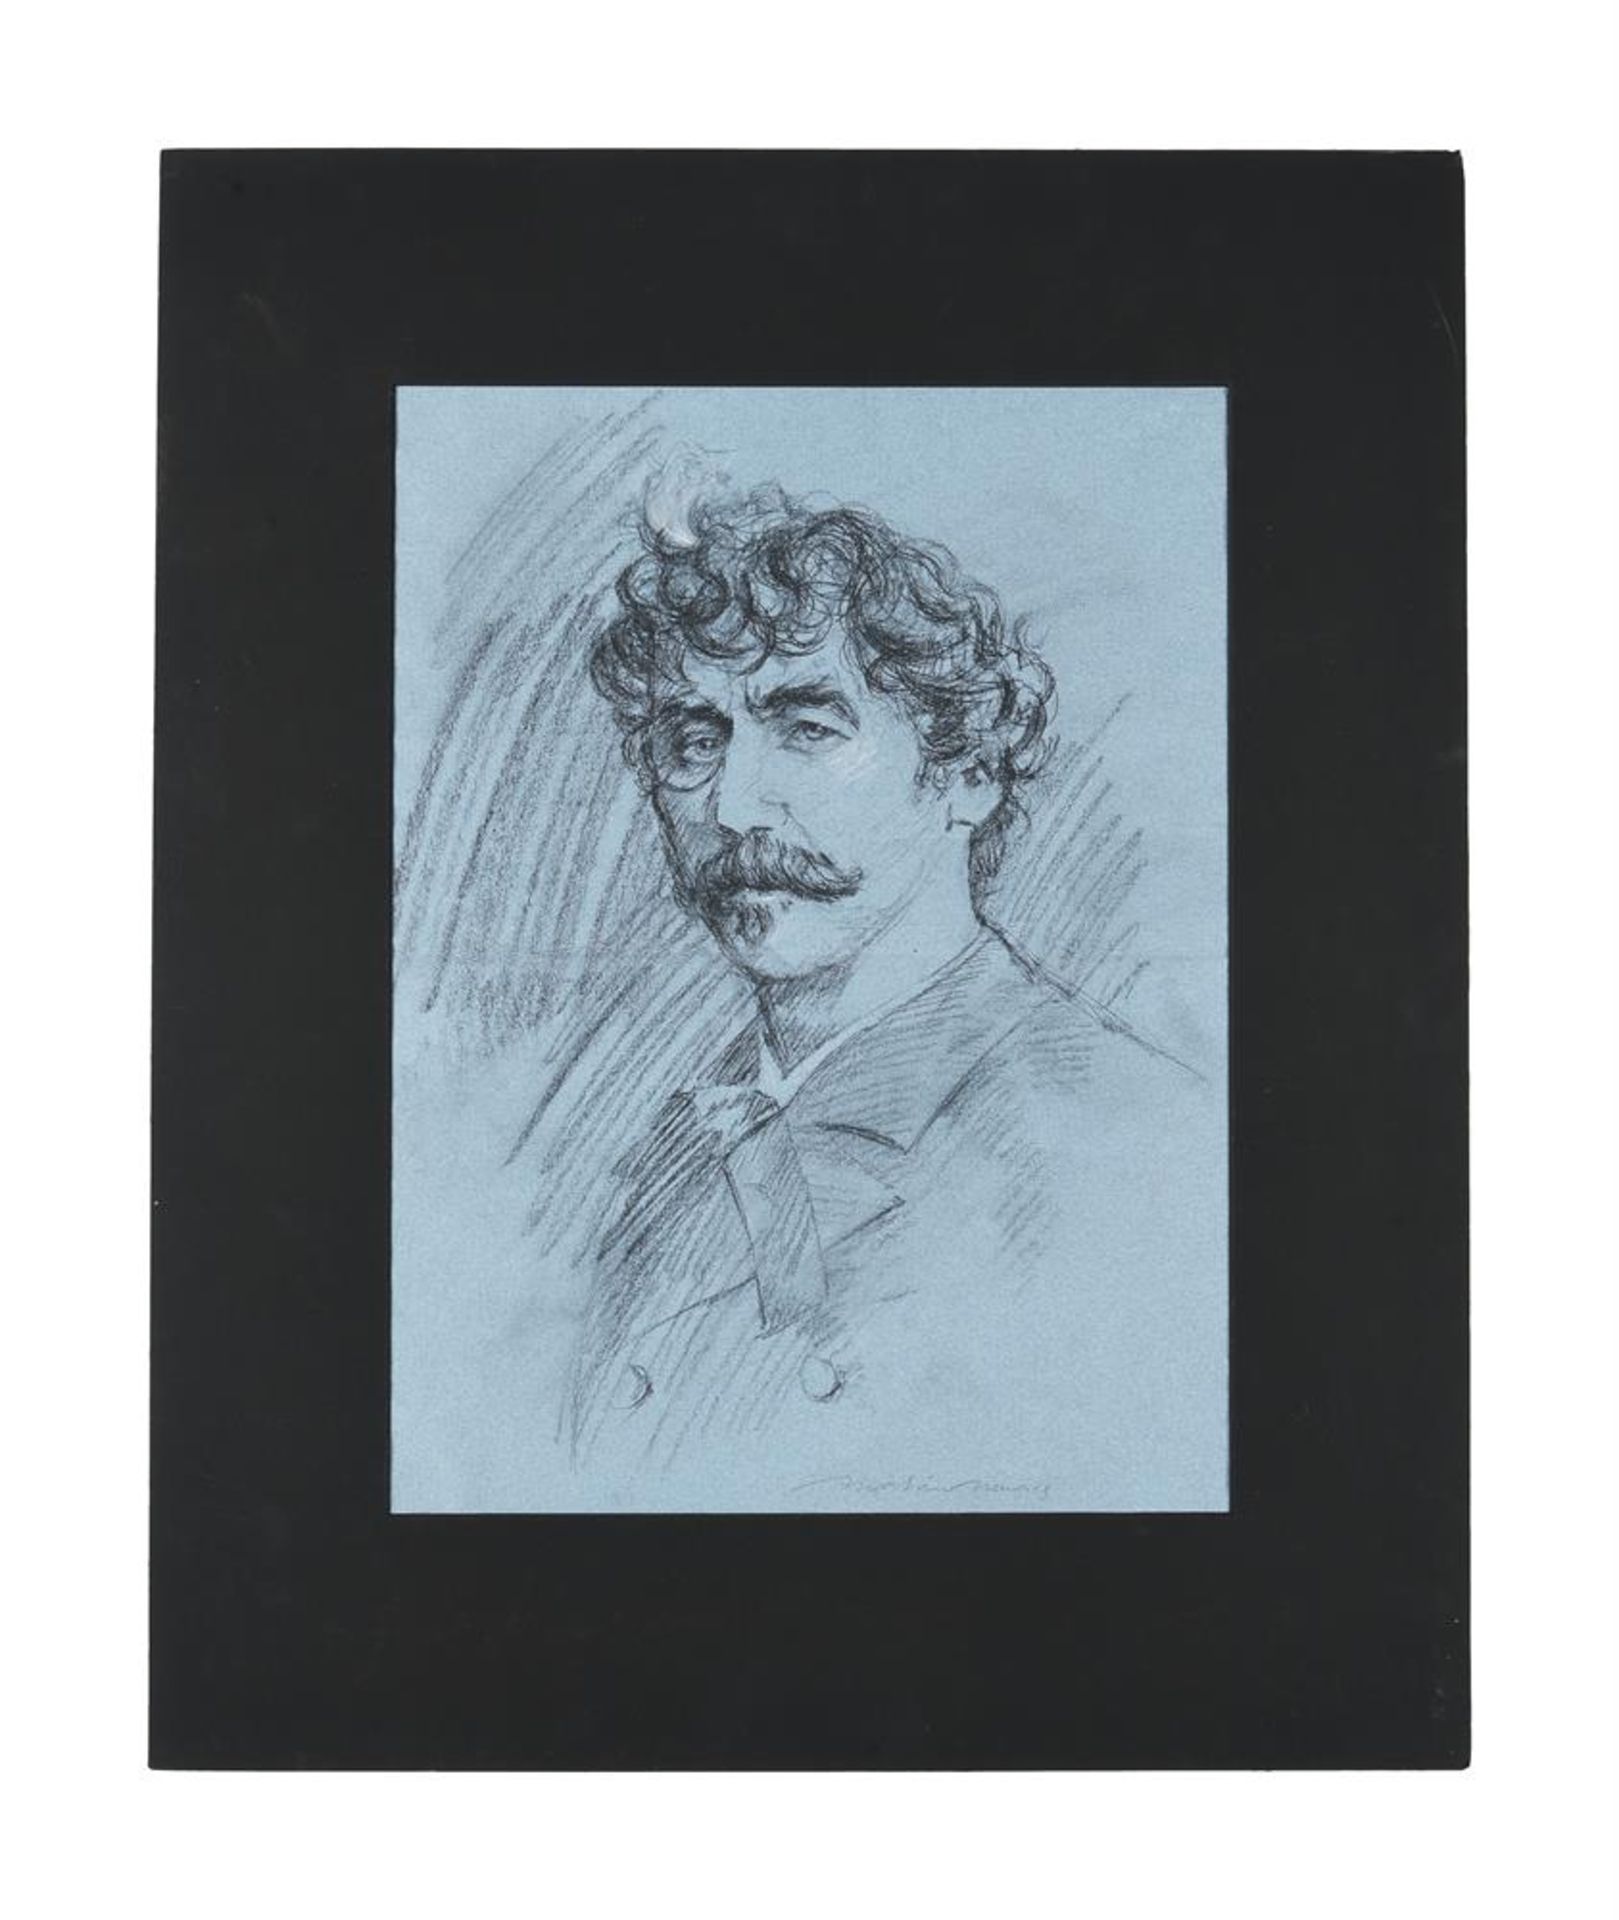 MORTIMER MENPES (BRITISH 1855 - 1938), PORTRAIT STUDY OF JAMES MCNEILL WHISTLER - Image 2 of 4